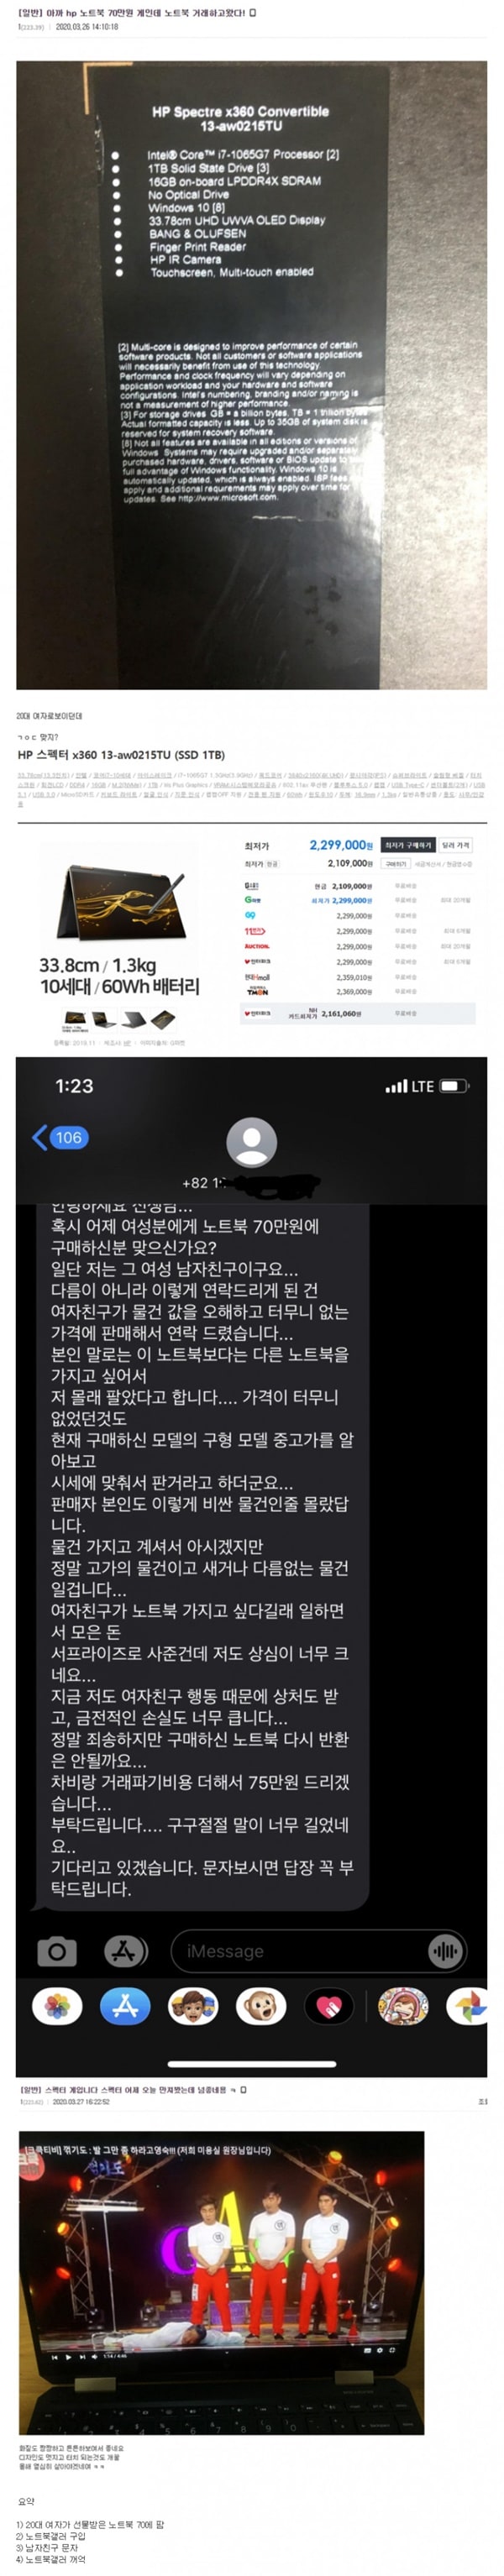 Dc 노트북 갤러리 역대급 사건